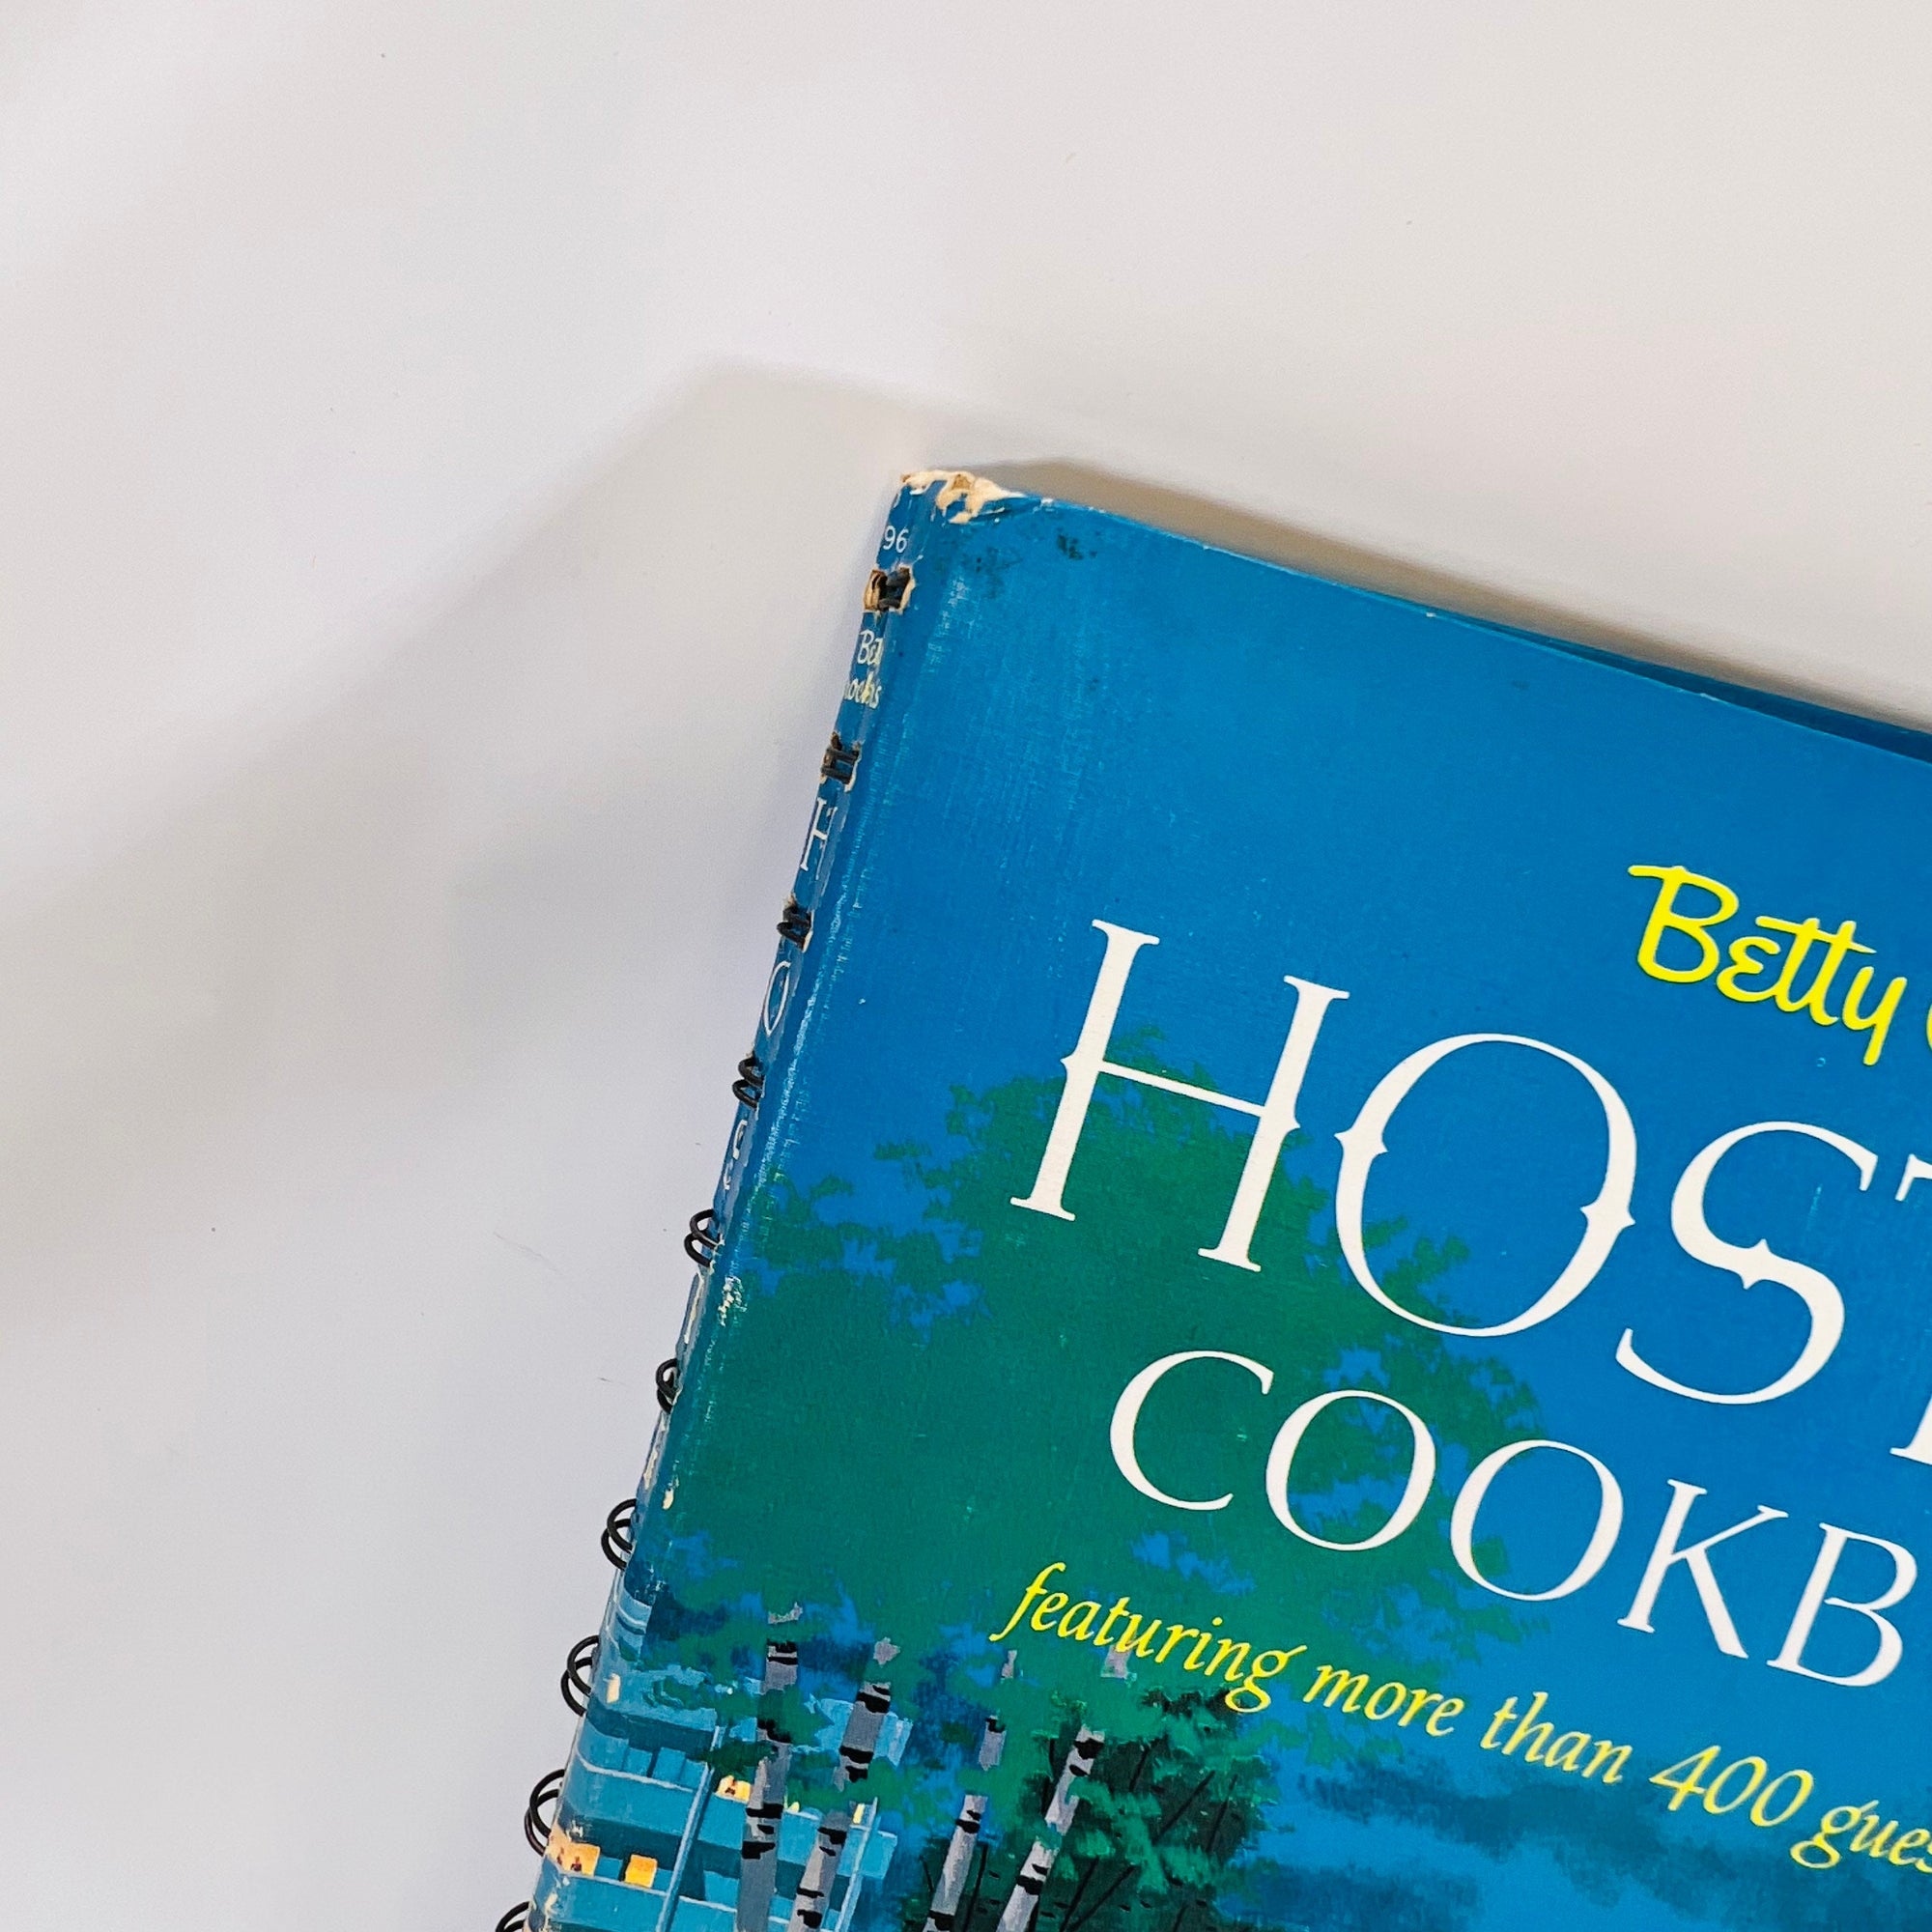 Betty Crocker Hostess Cookbook A Wealth of Ideas for Todays Entertaining 1967 Golden Press Vintage Cookbook